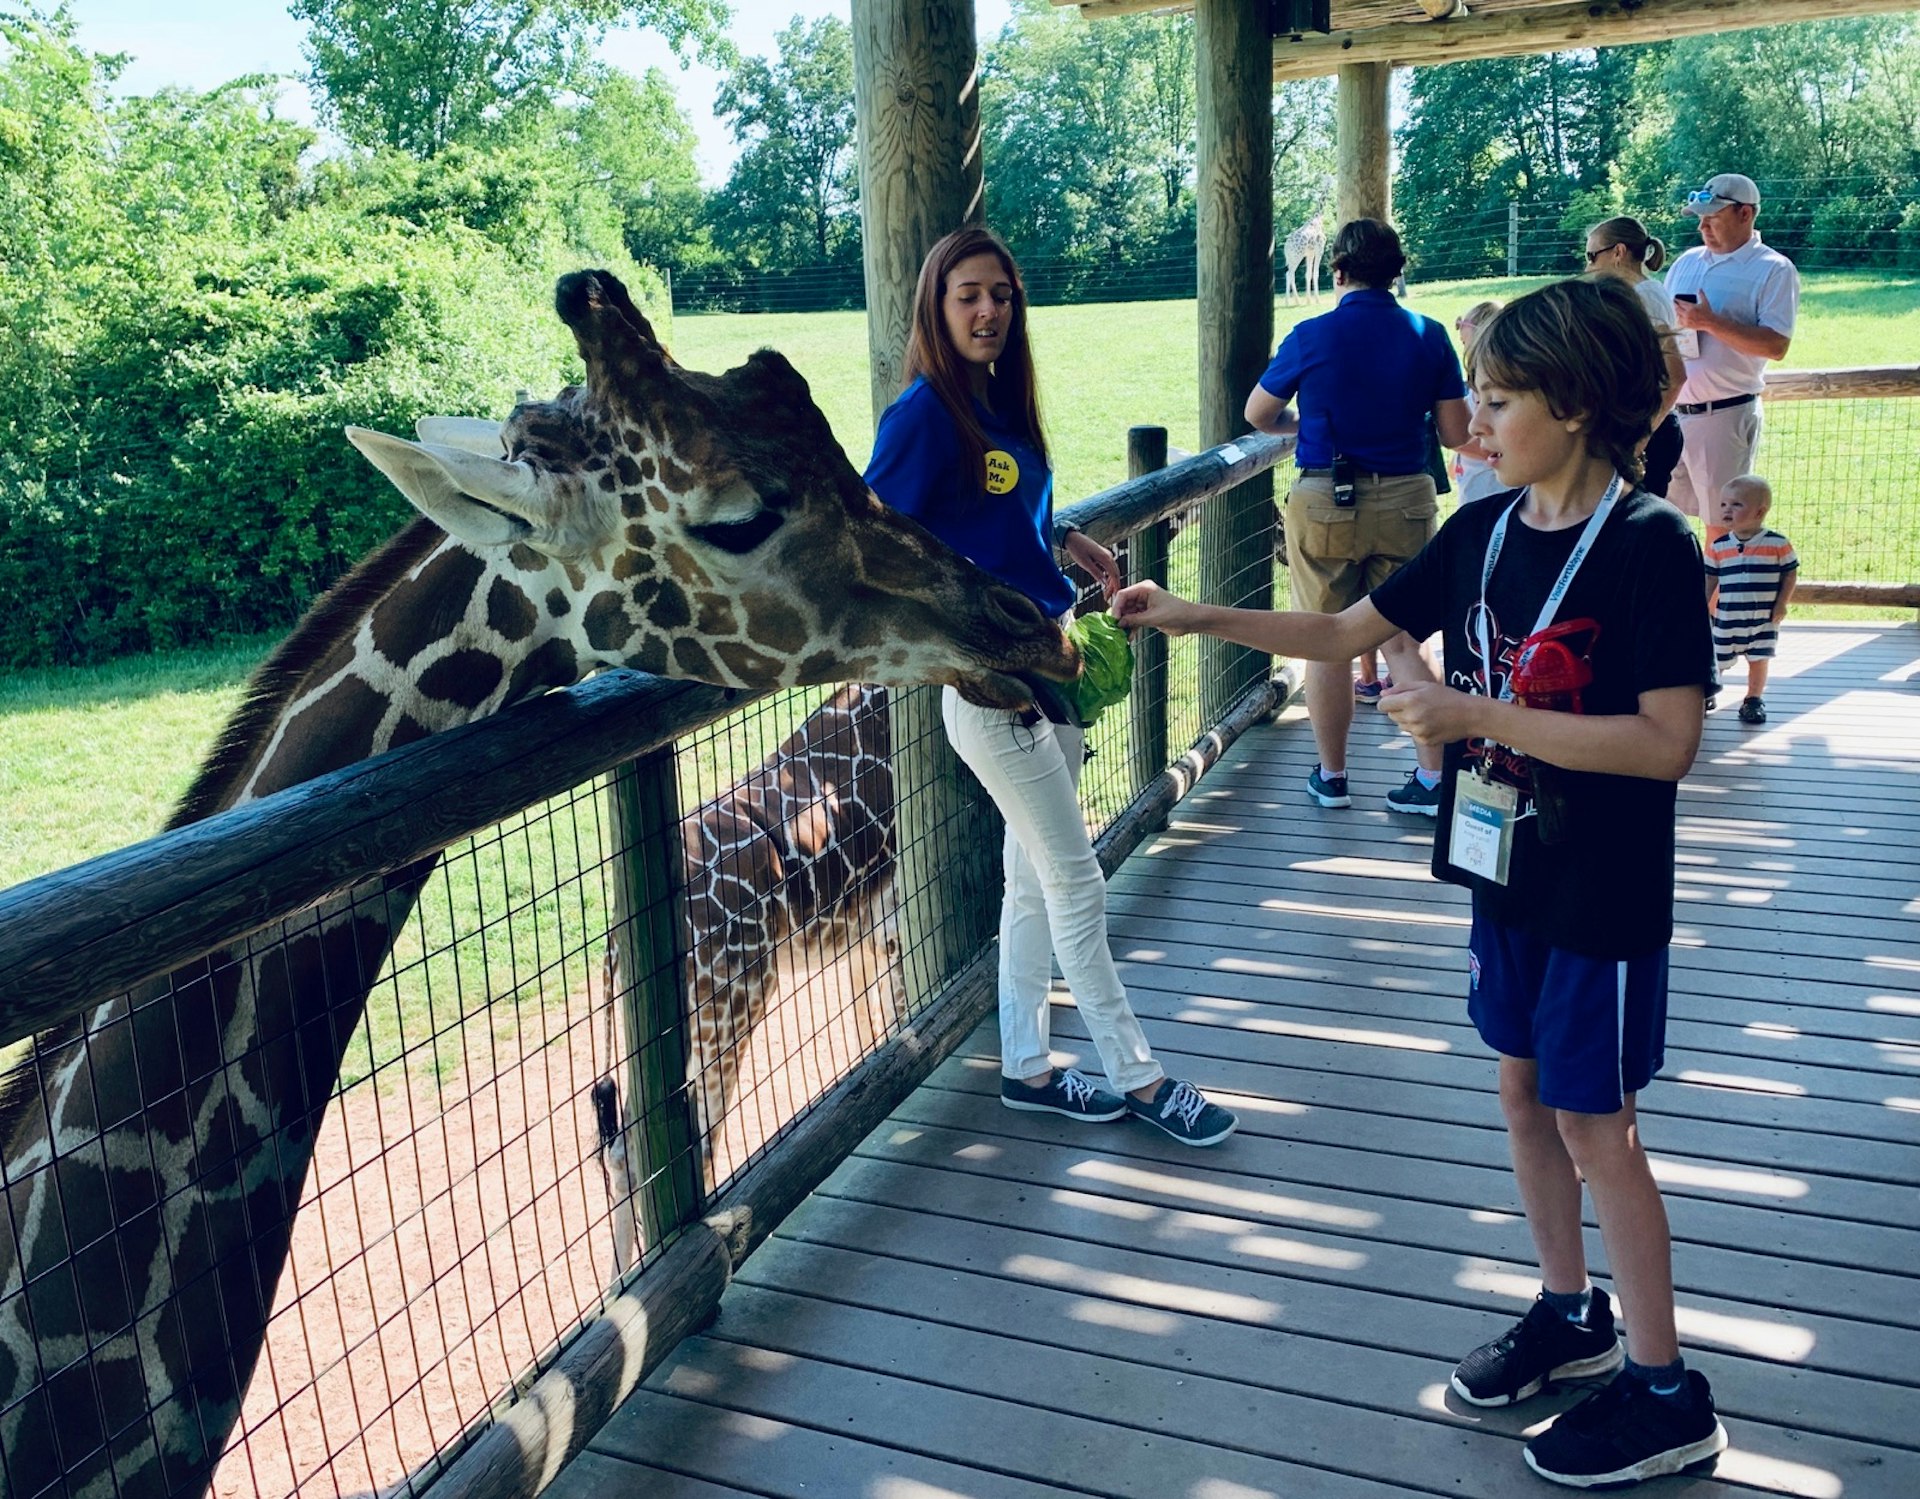 A boy feeds a giraffe at a zoo; midwest travel ideas